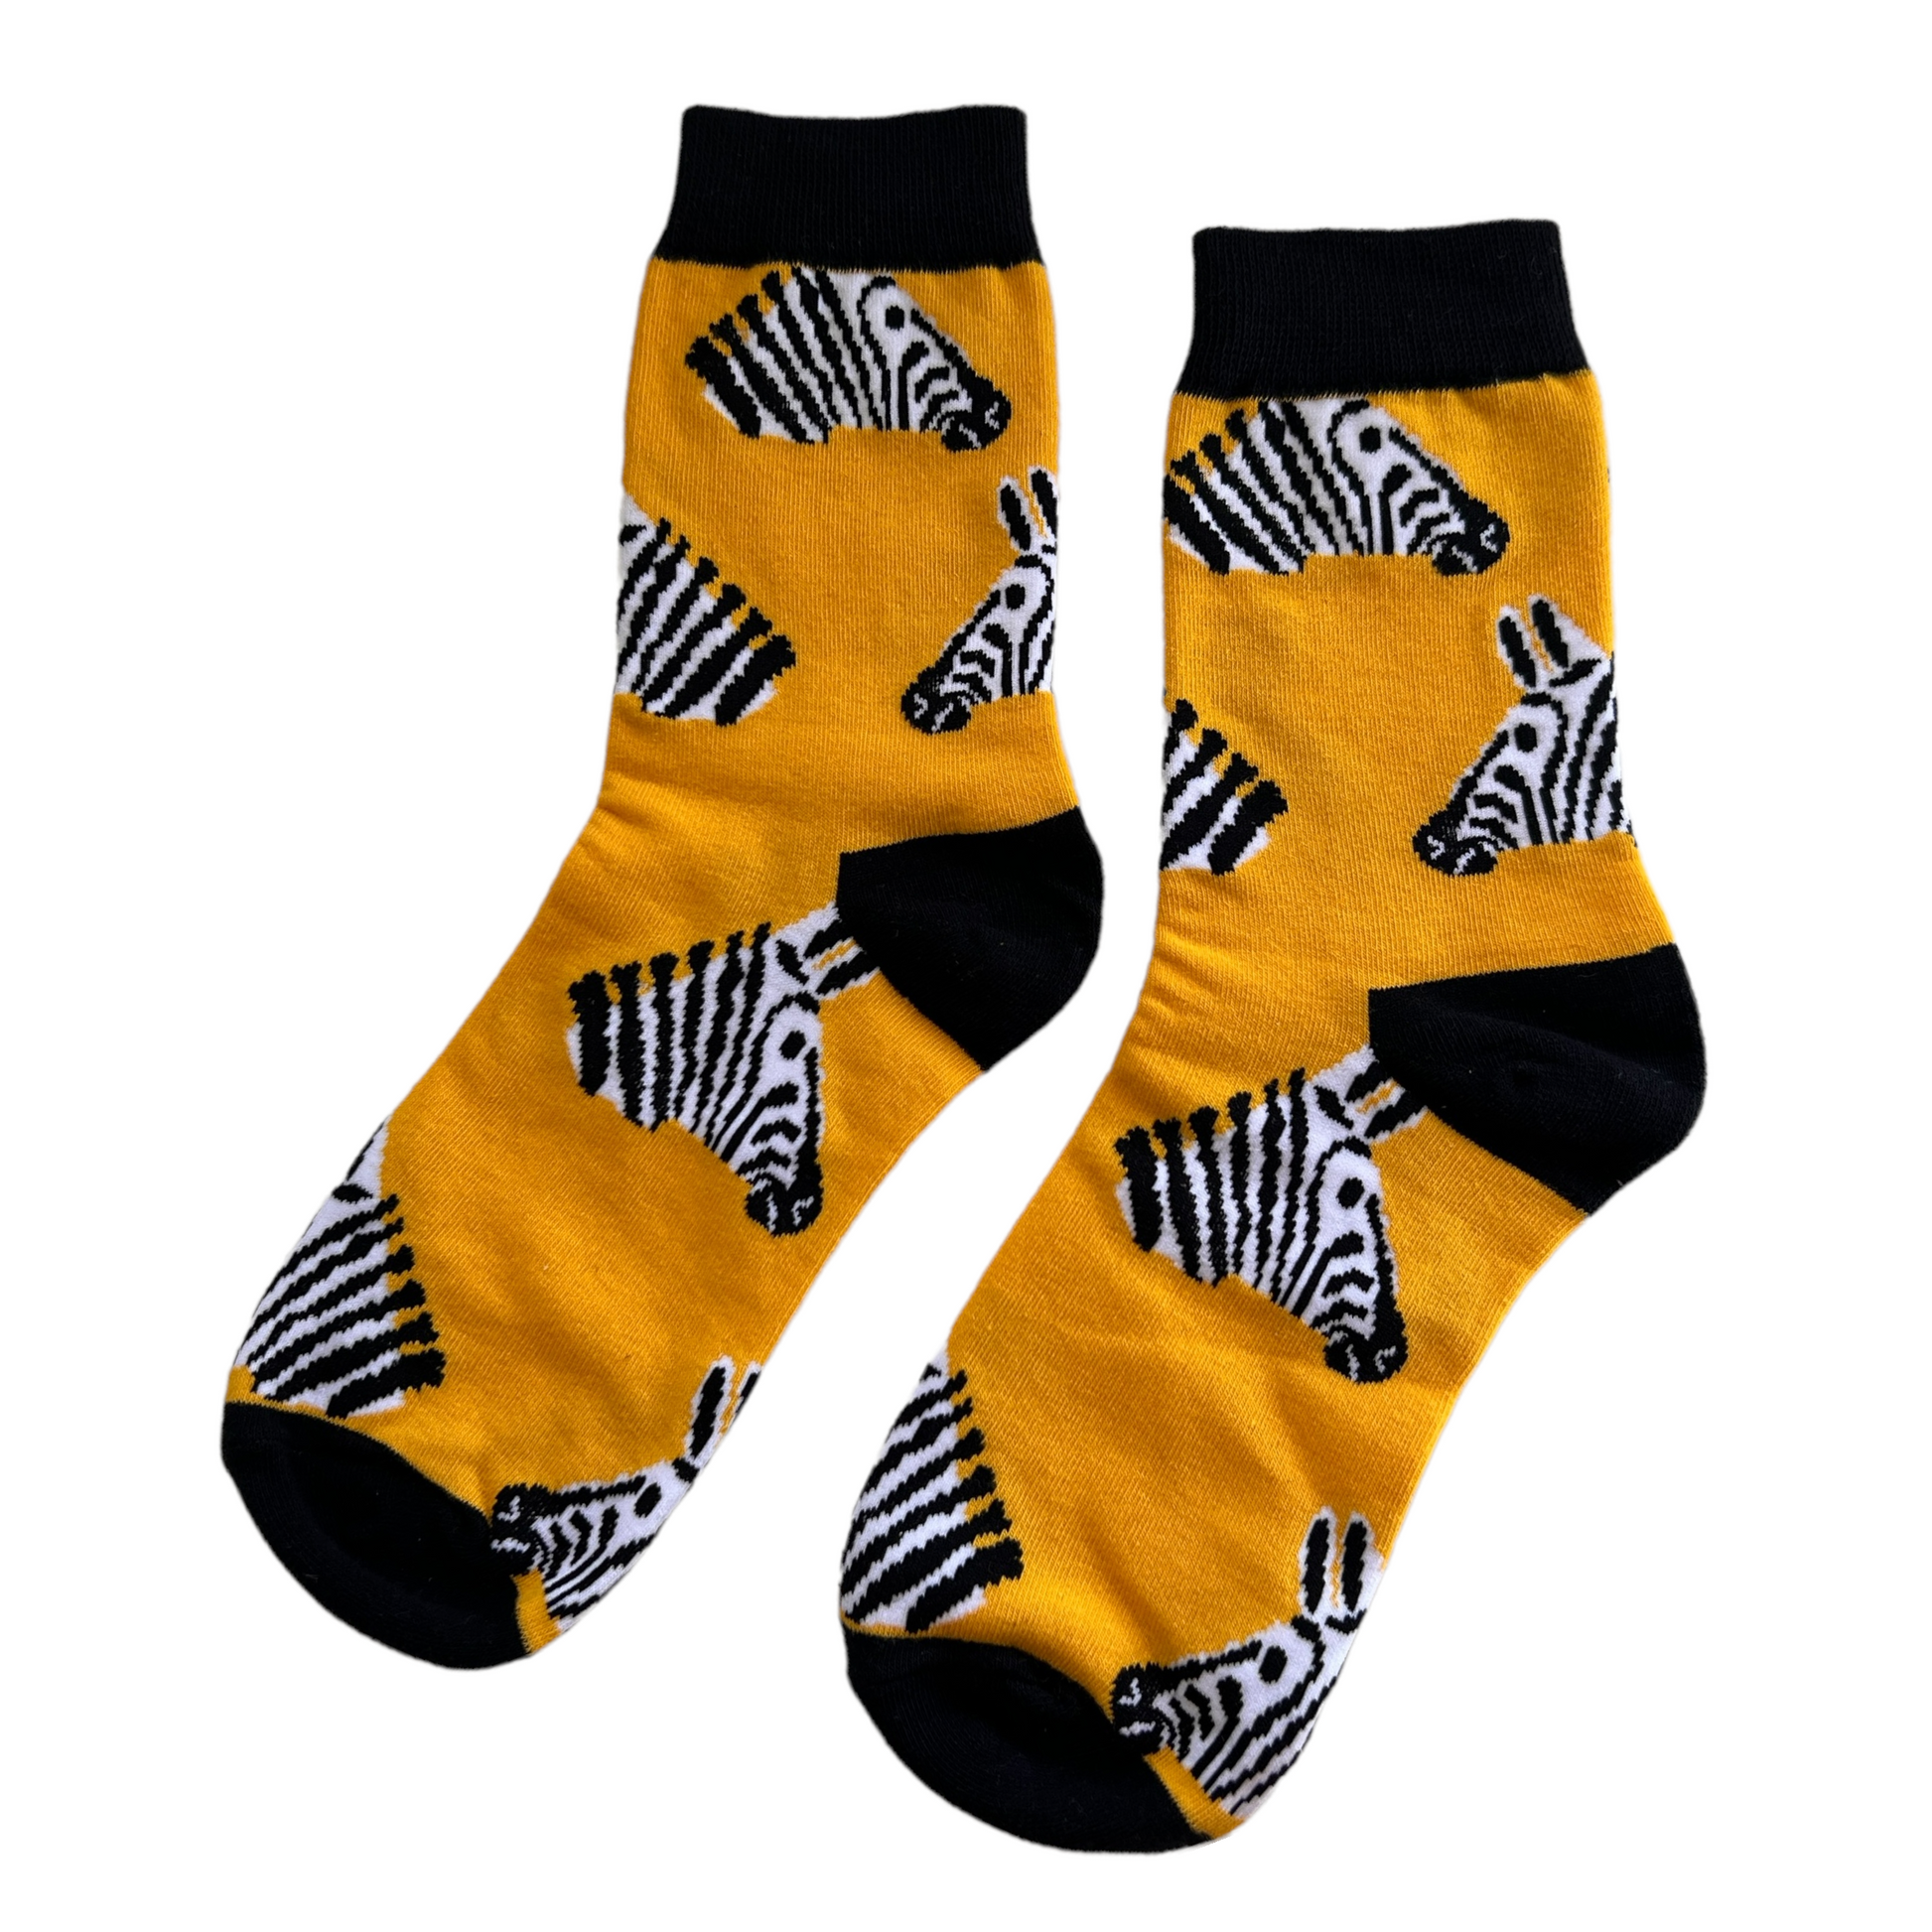 Socks — Zebra  SPIRIT SPARKPLUGS   